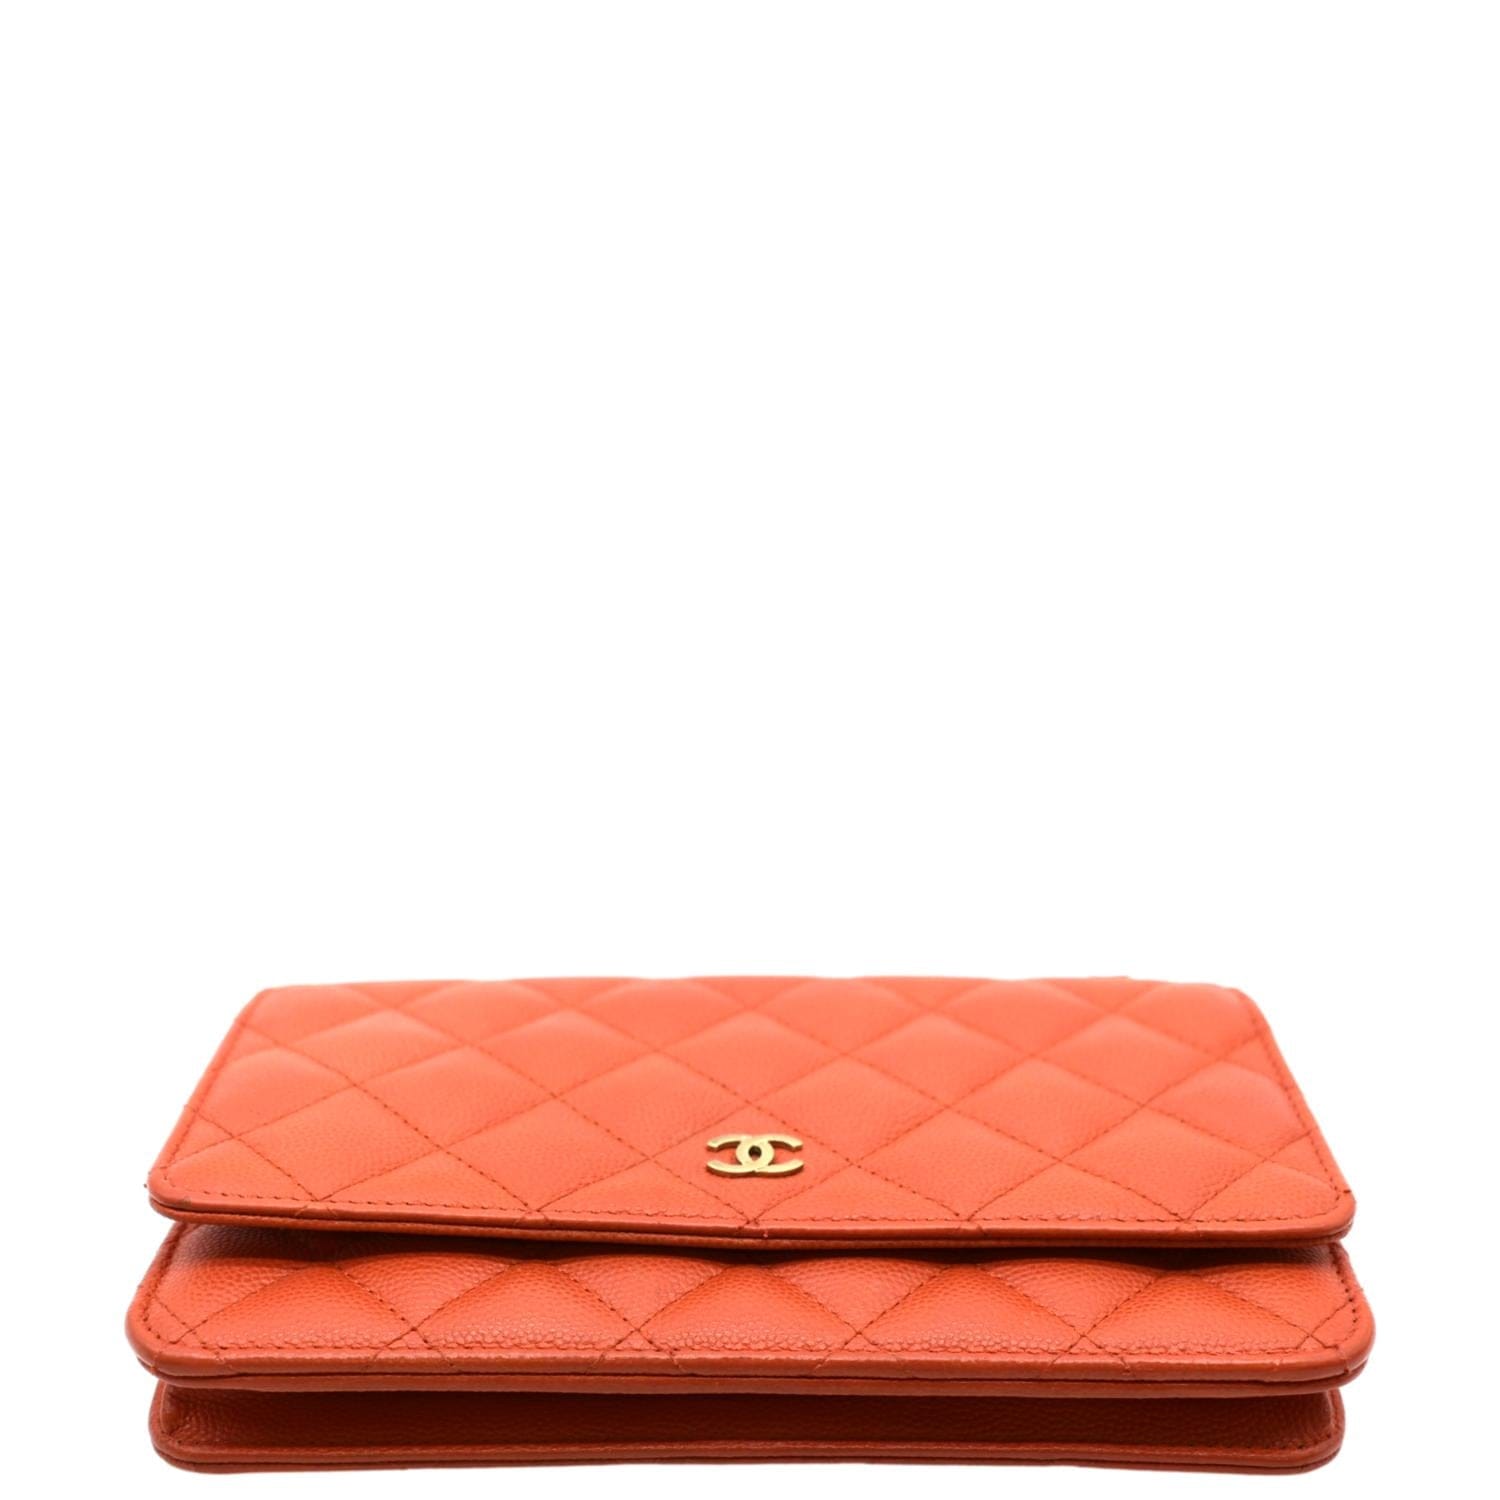 chanel orange wallet